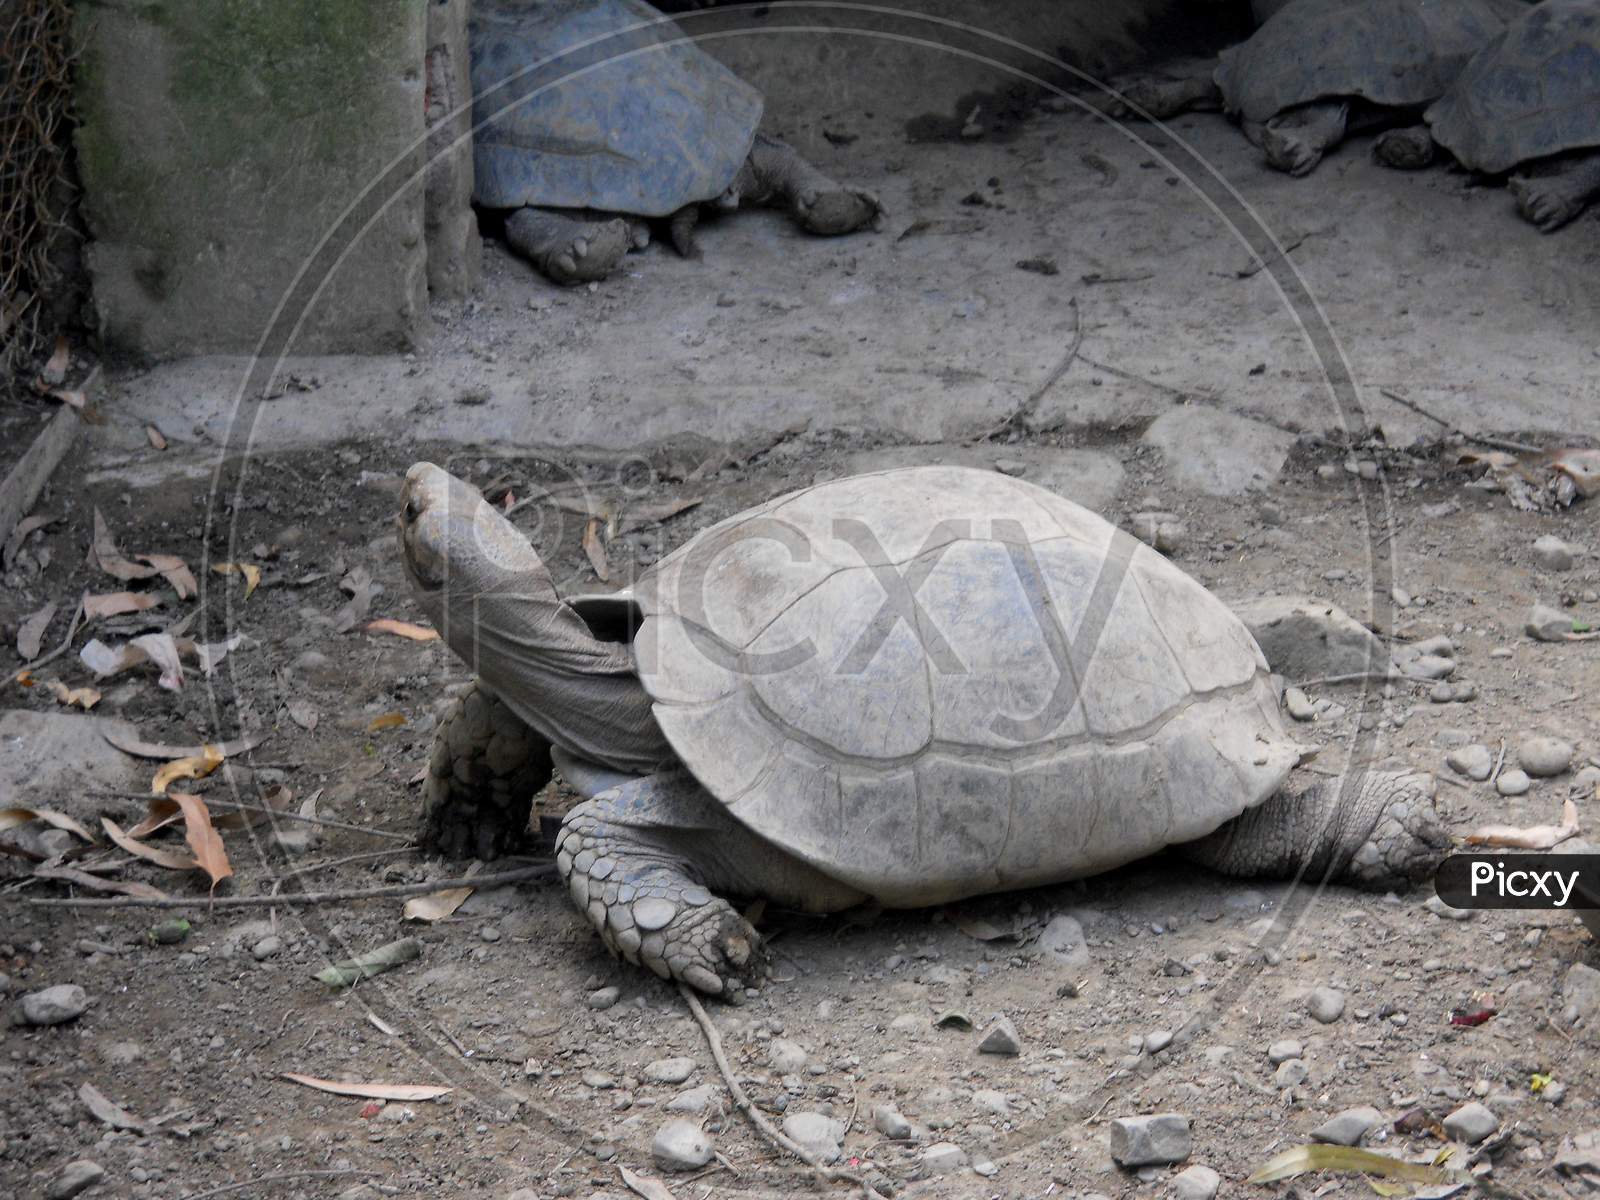 Tortoise, Wild animal, Mobile photography